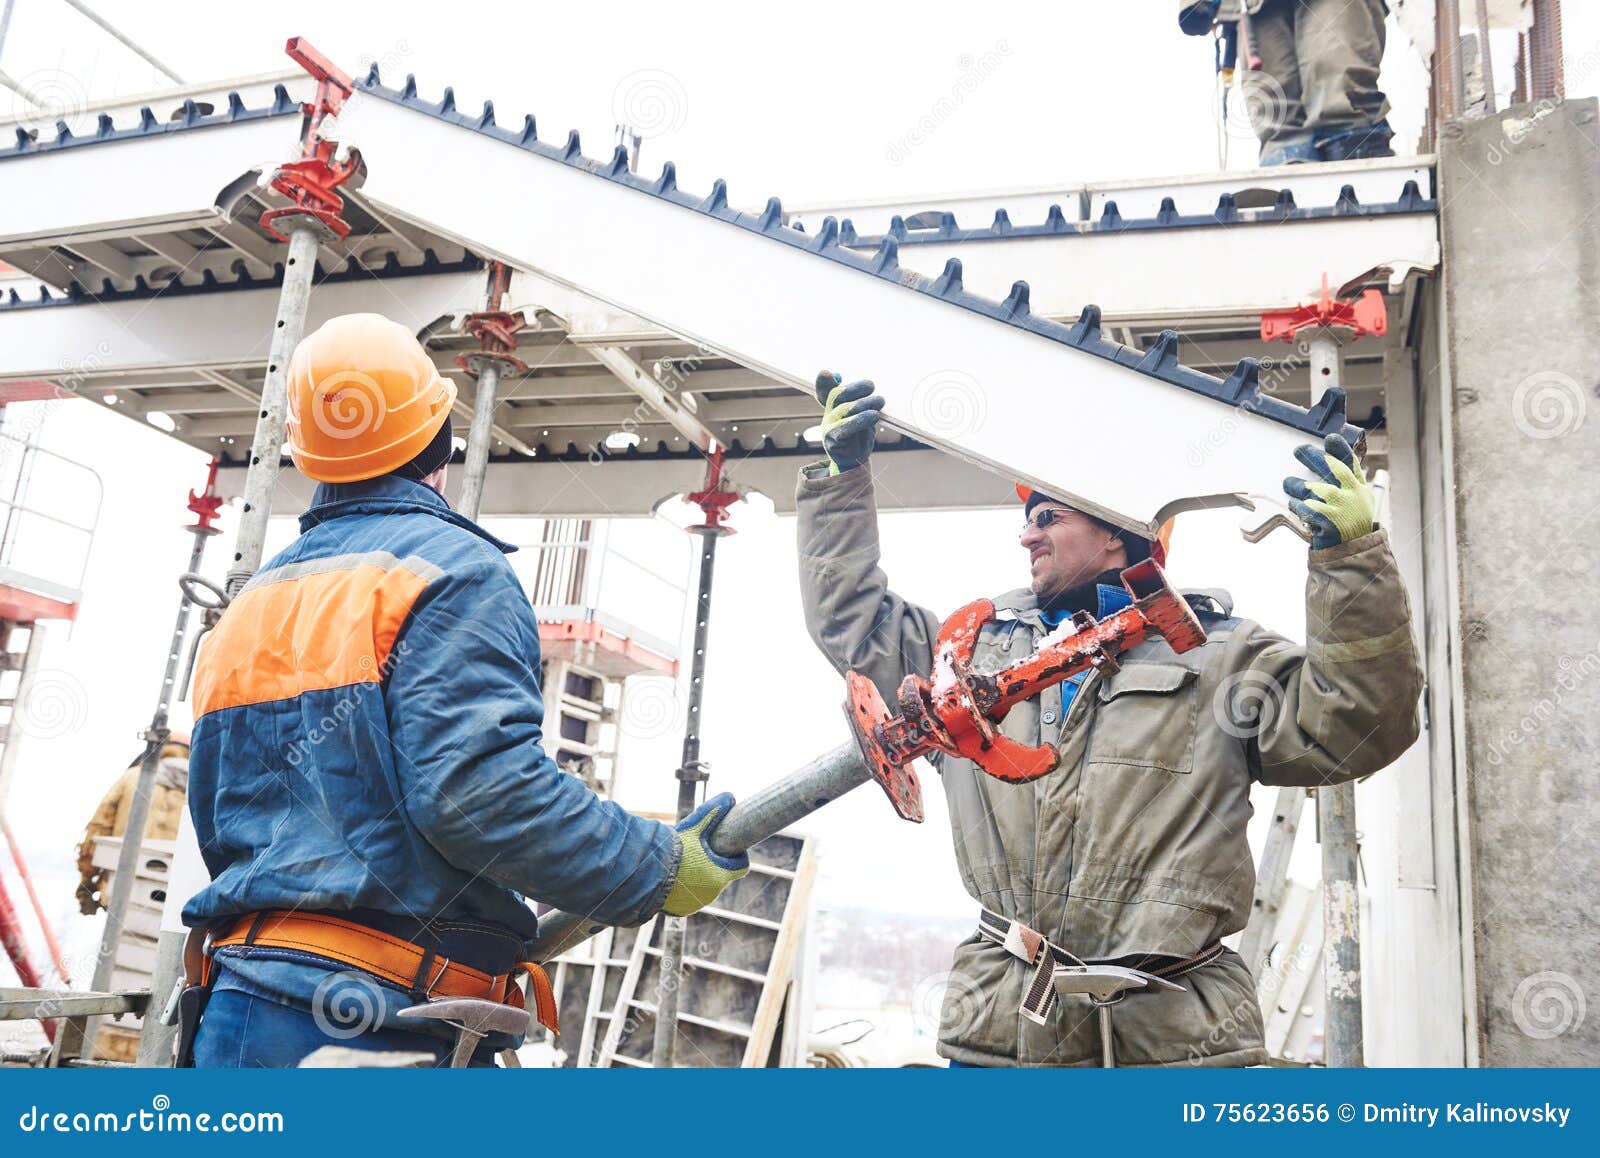 worker installing falsework construction